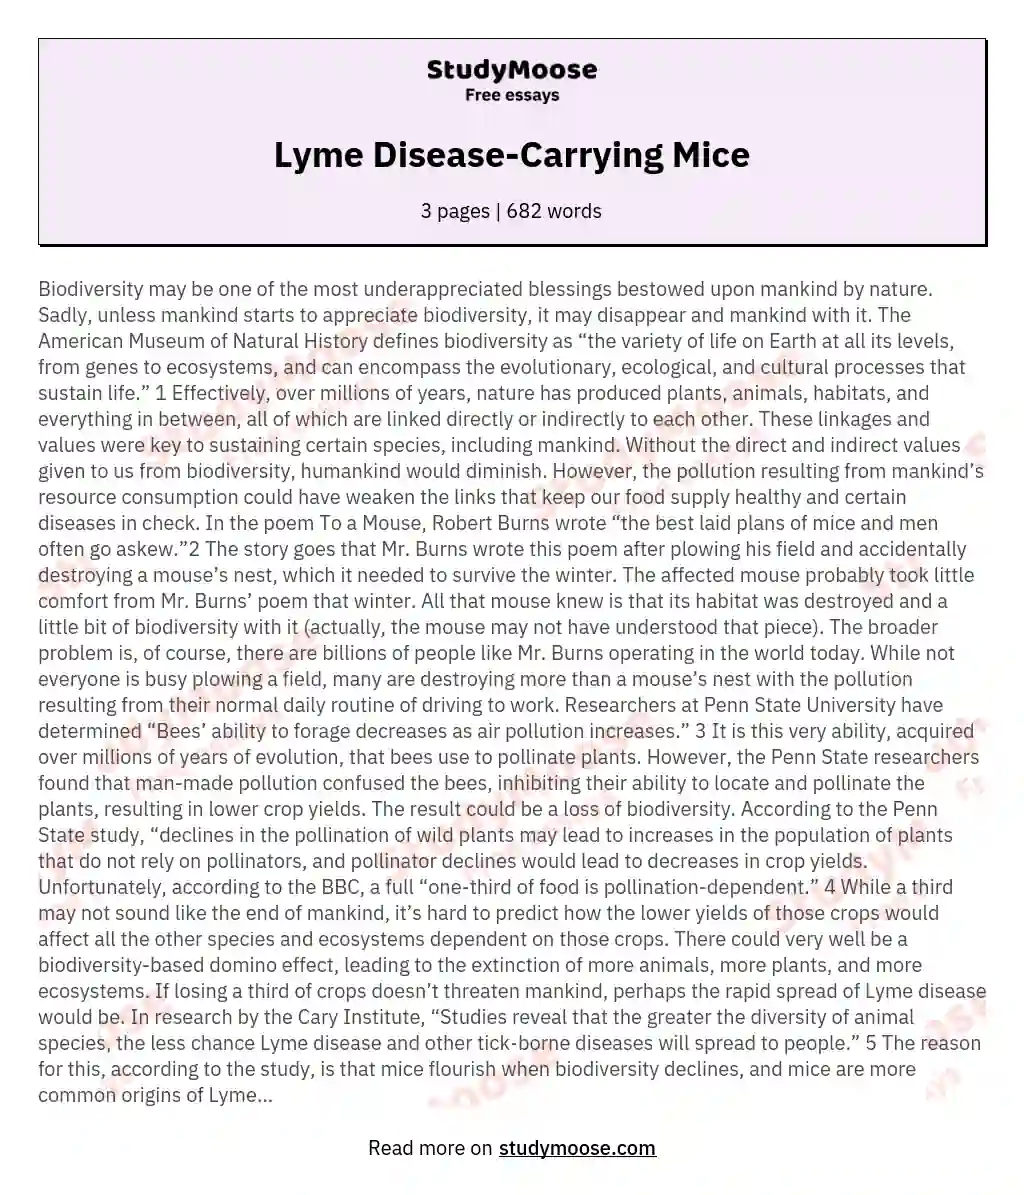 Lyme Disease-Carrying Mice essay